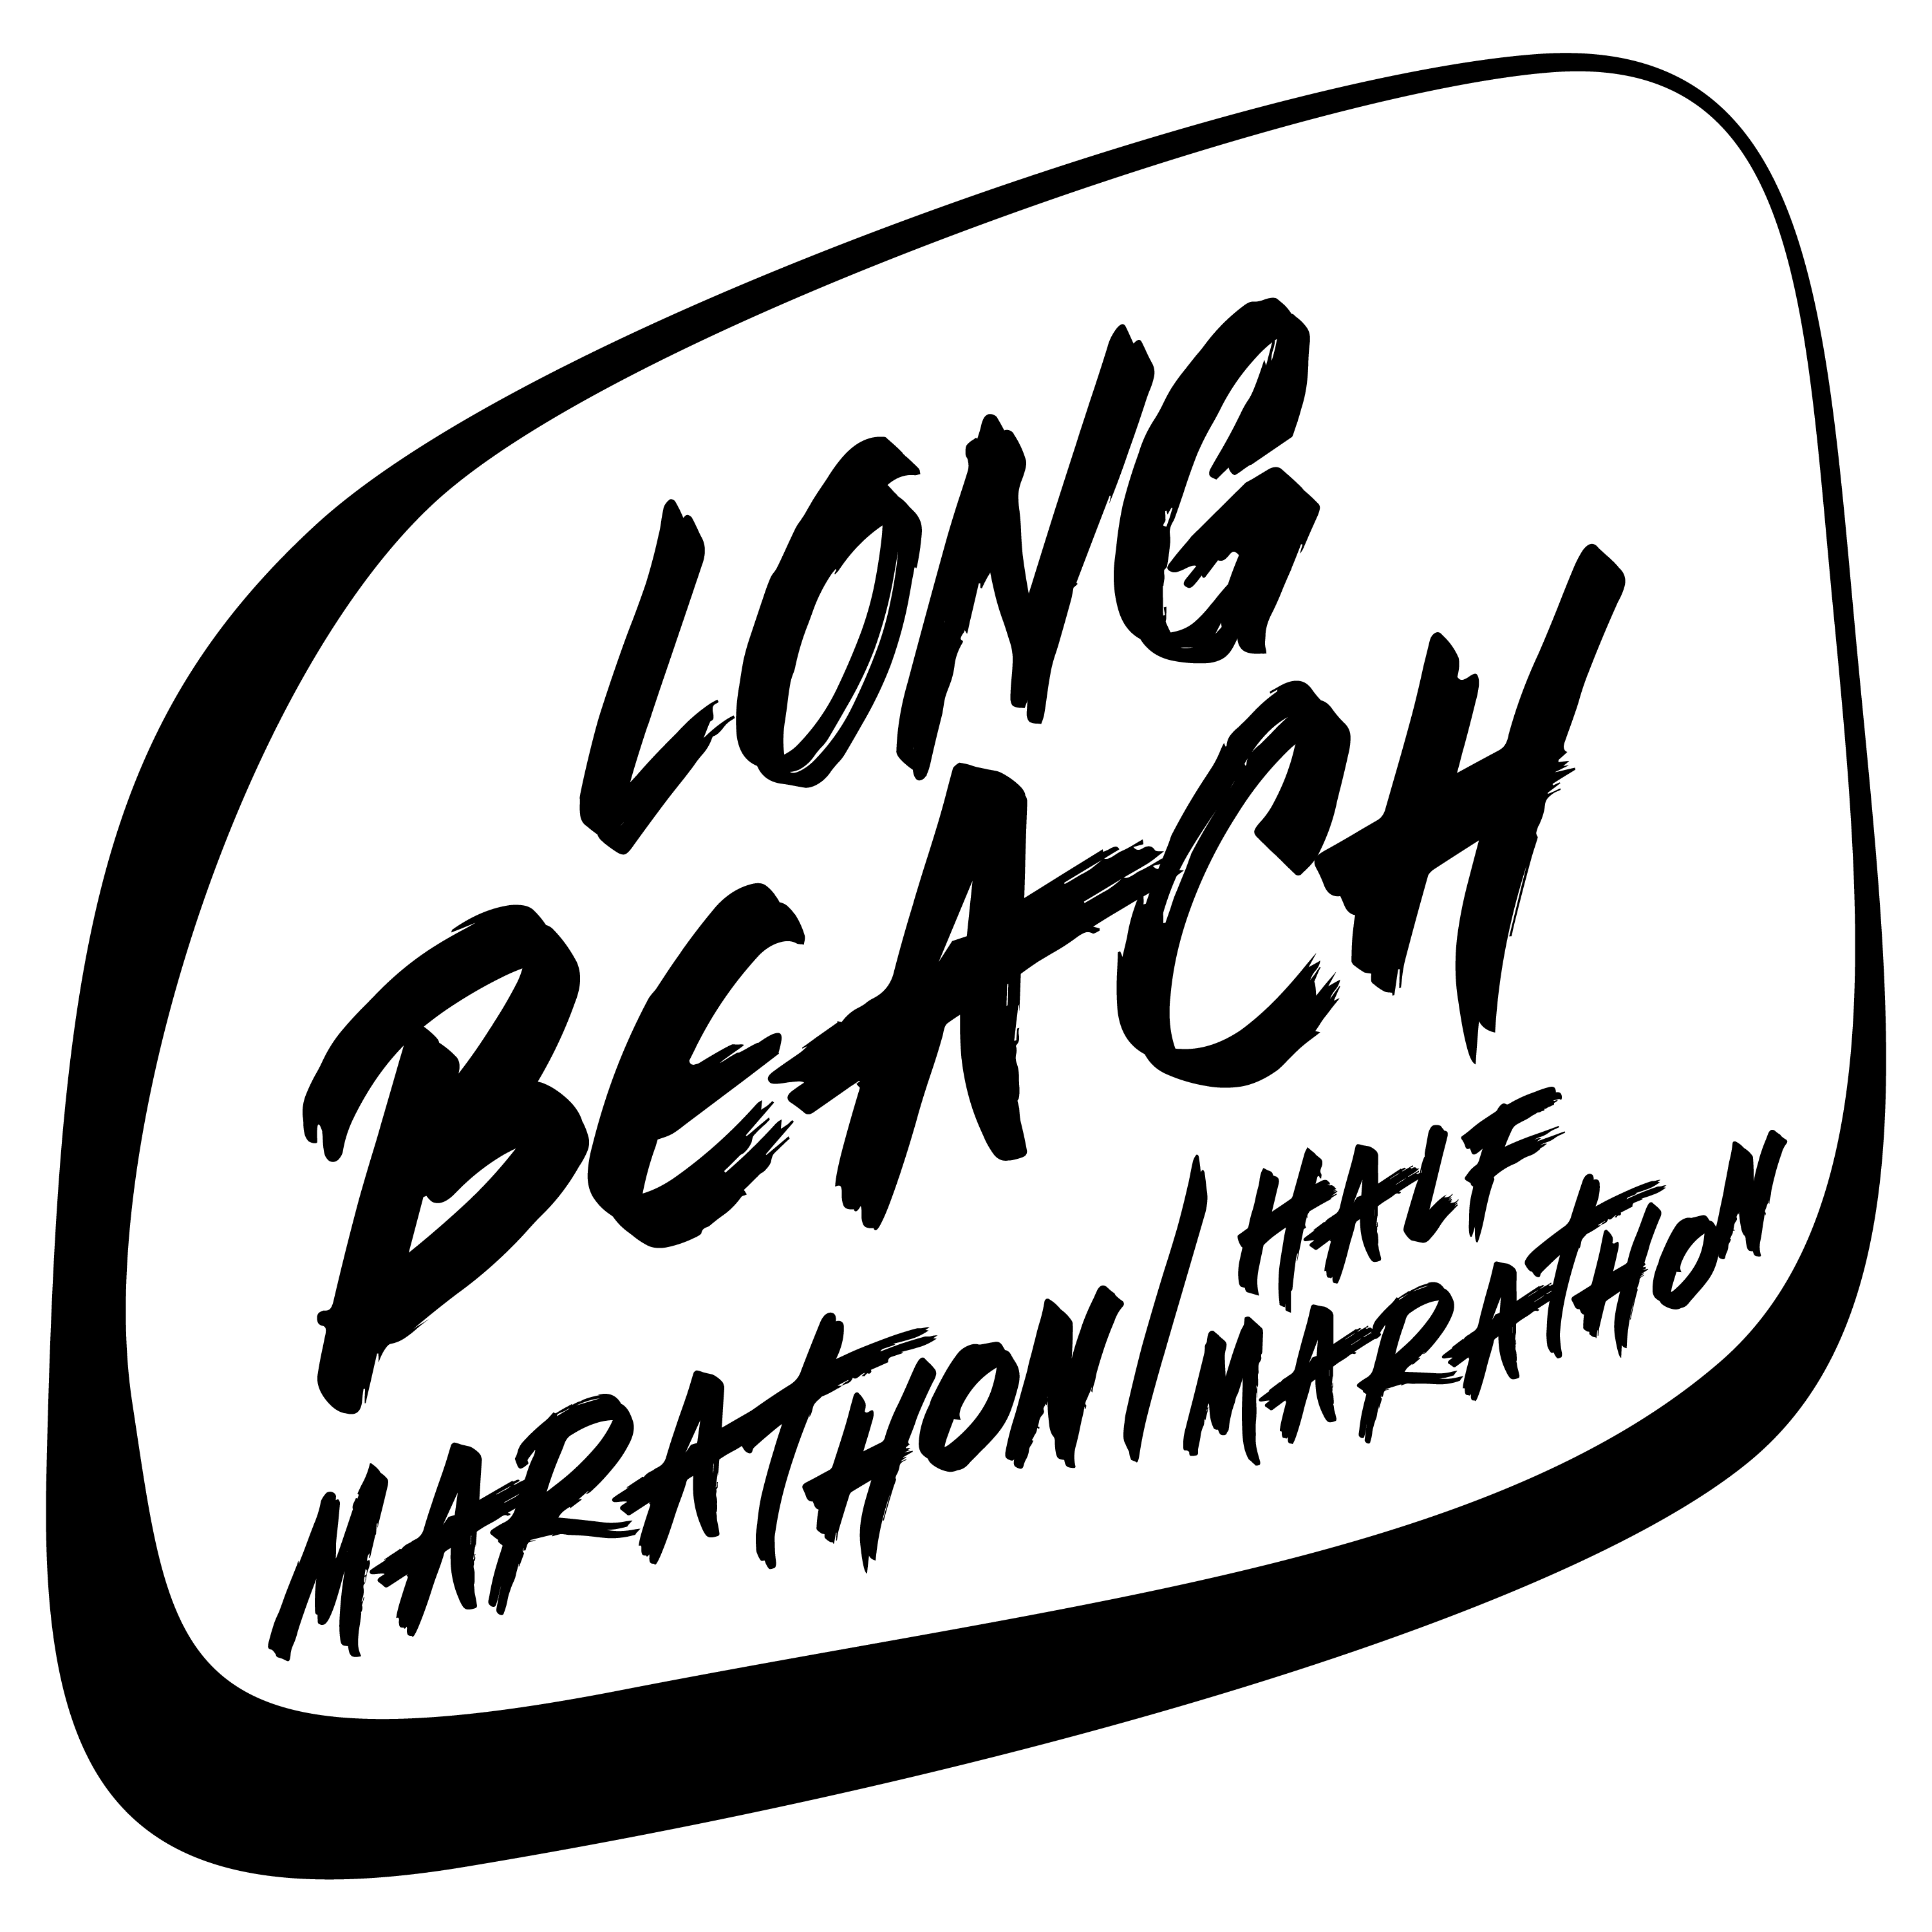 Long Beach Marathon logo